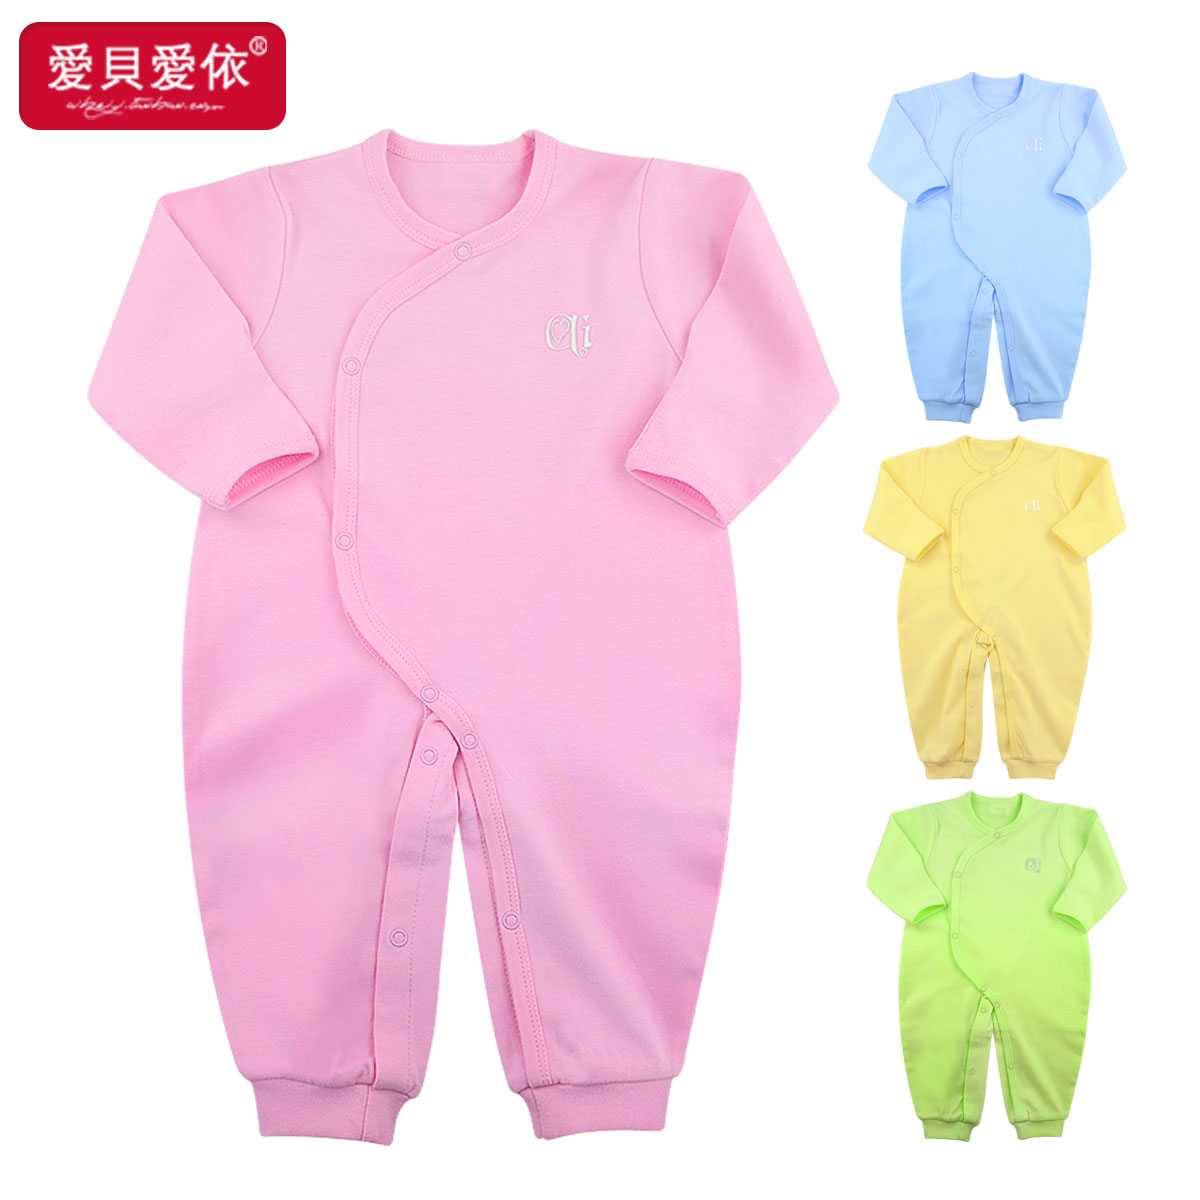 Free shipping Baby infant underwear 100% cotton 100% cotton set newborn clothes bodysuit romper spring and autumn